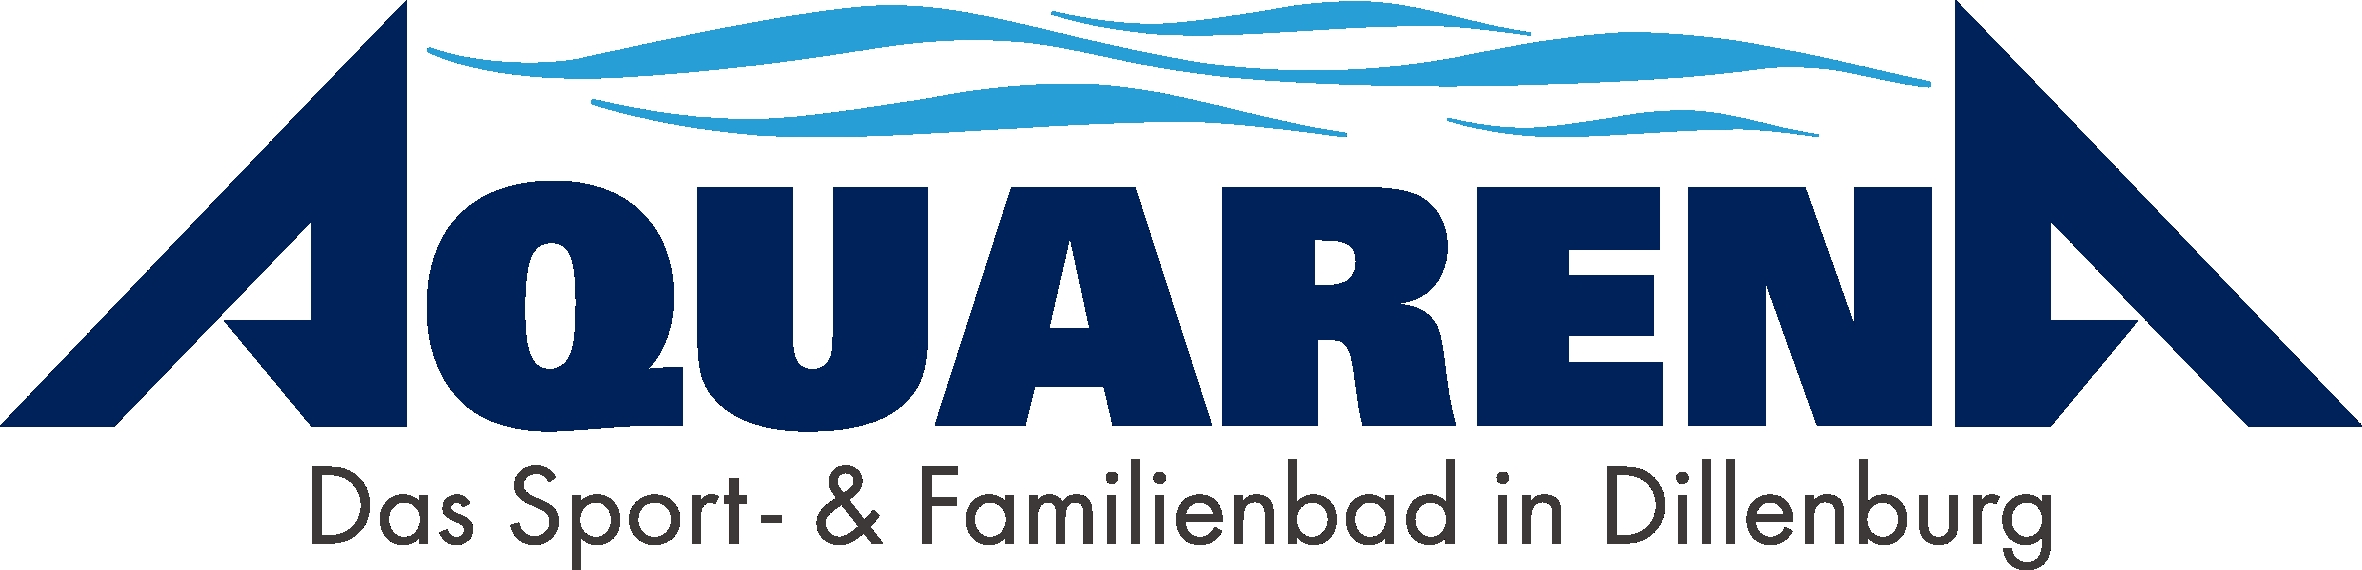 Logo des Aquarena - Das Sport und Familienbad in Dillenburg